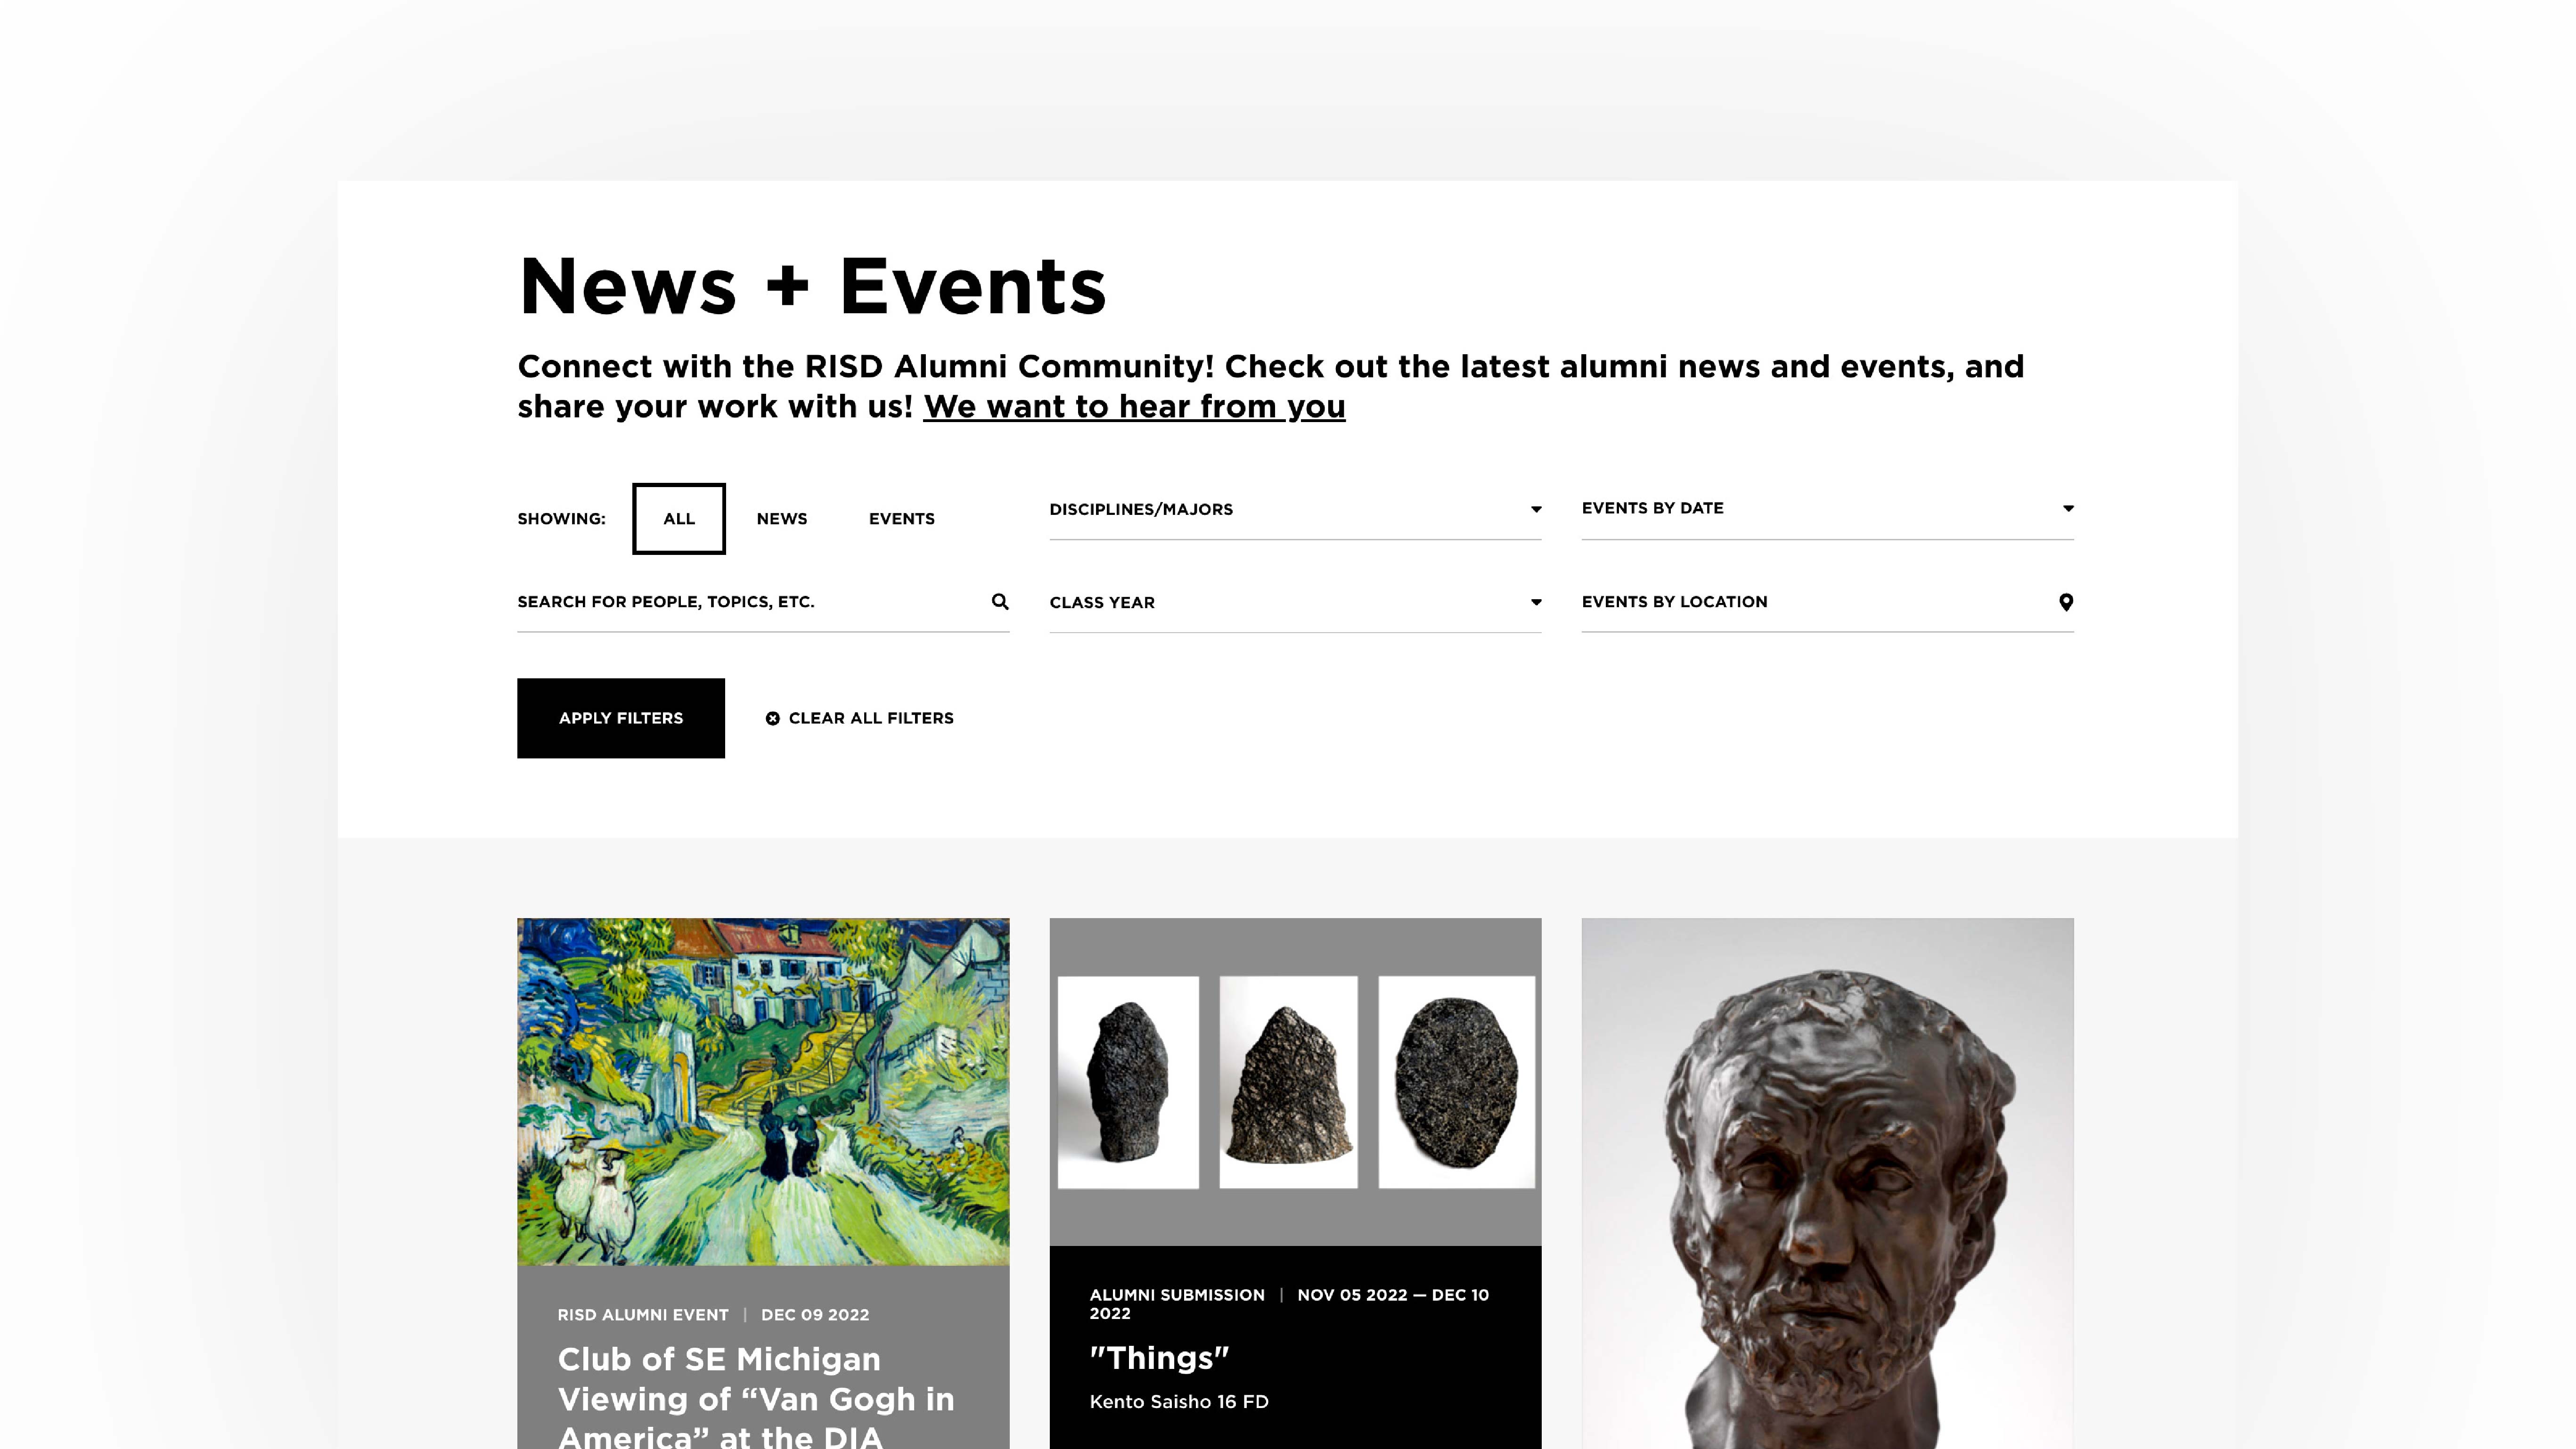 RISD Alumni website news + events page screenshot